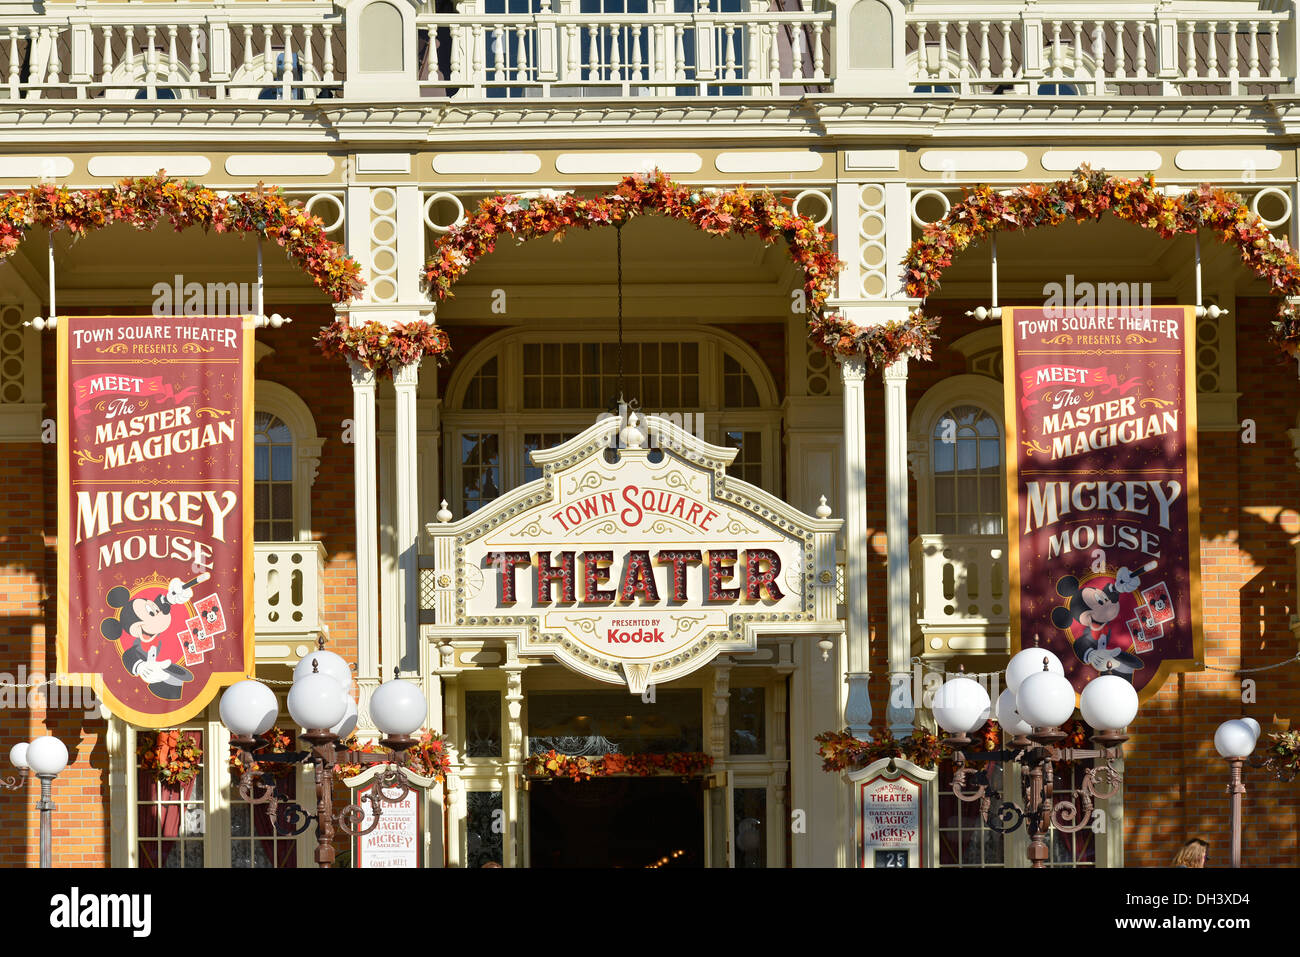 Town Square Theatre am Eingang des Magic Kingdom, Disney World, Orlando Florida Stockfoto